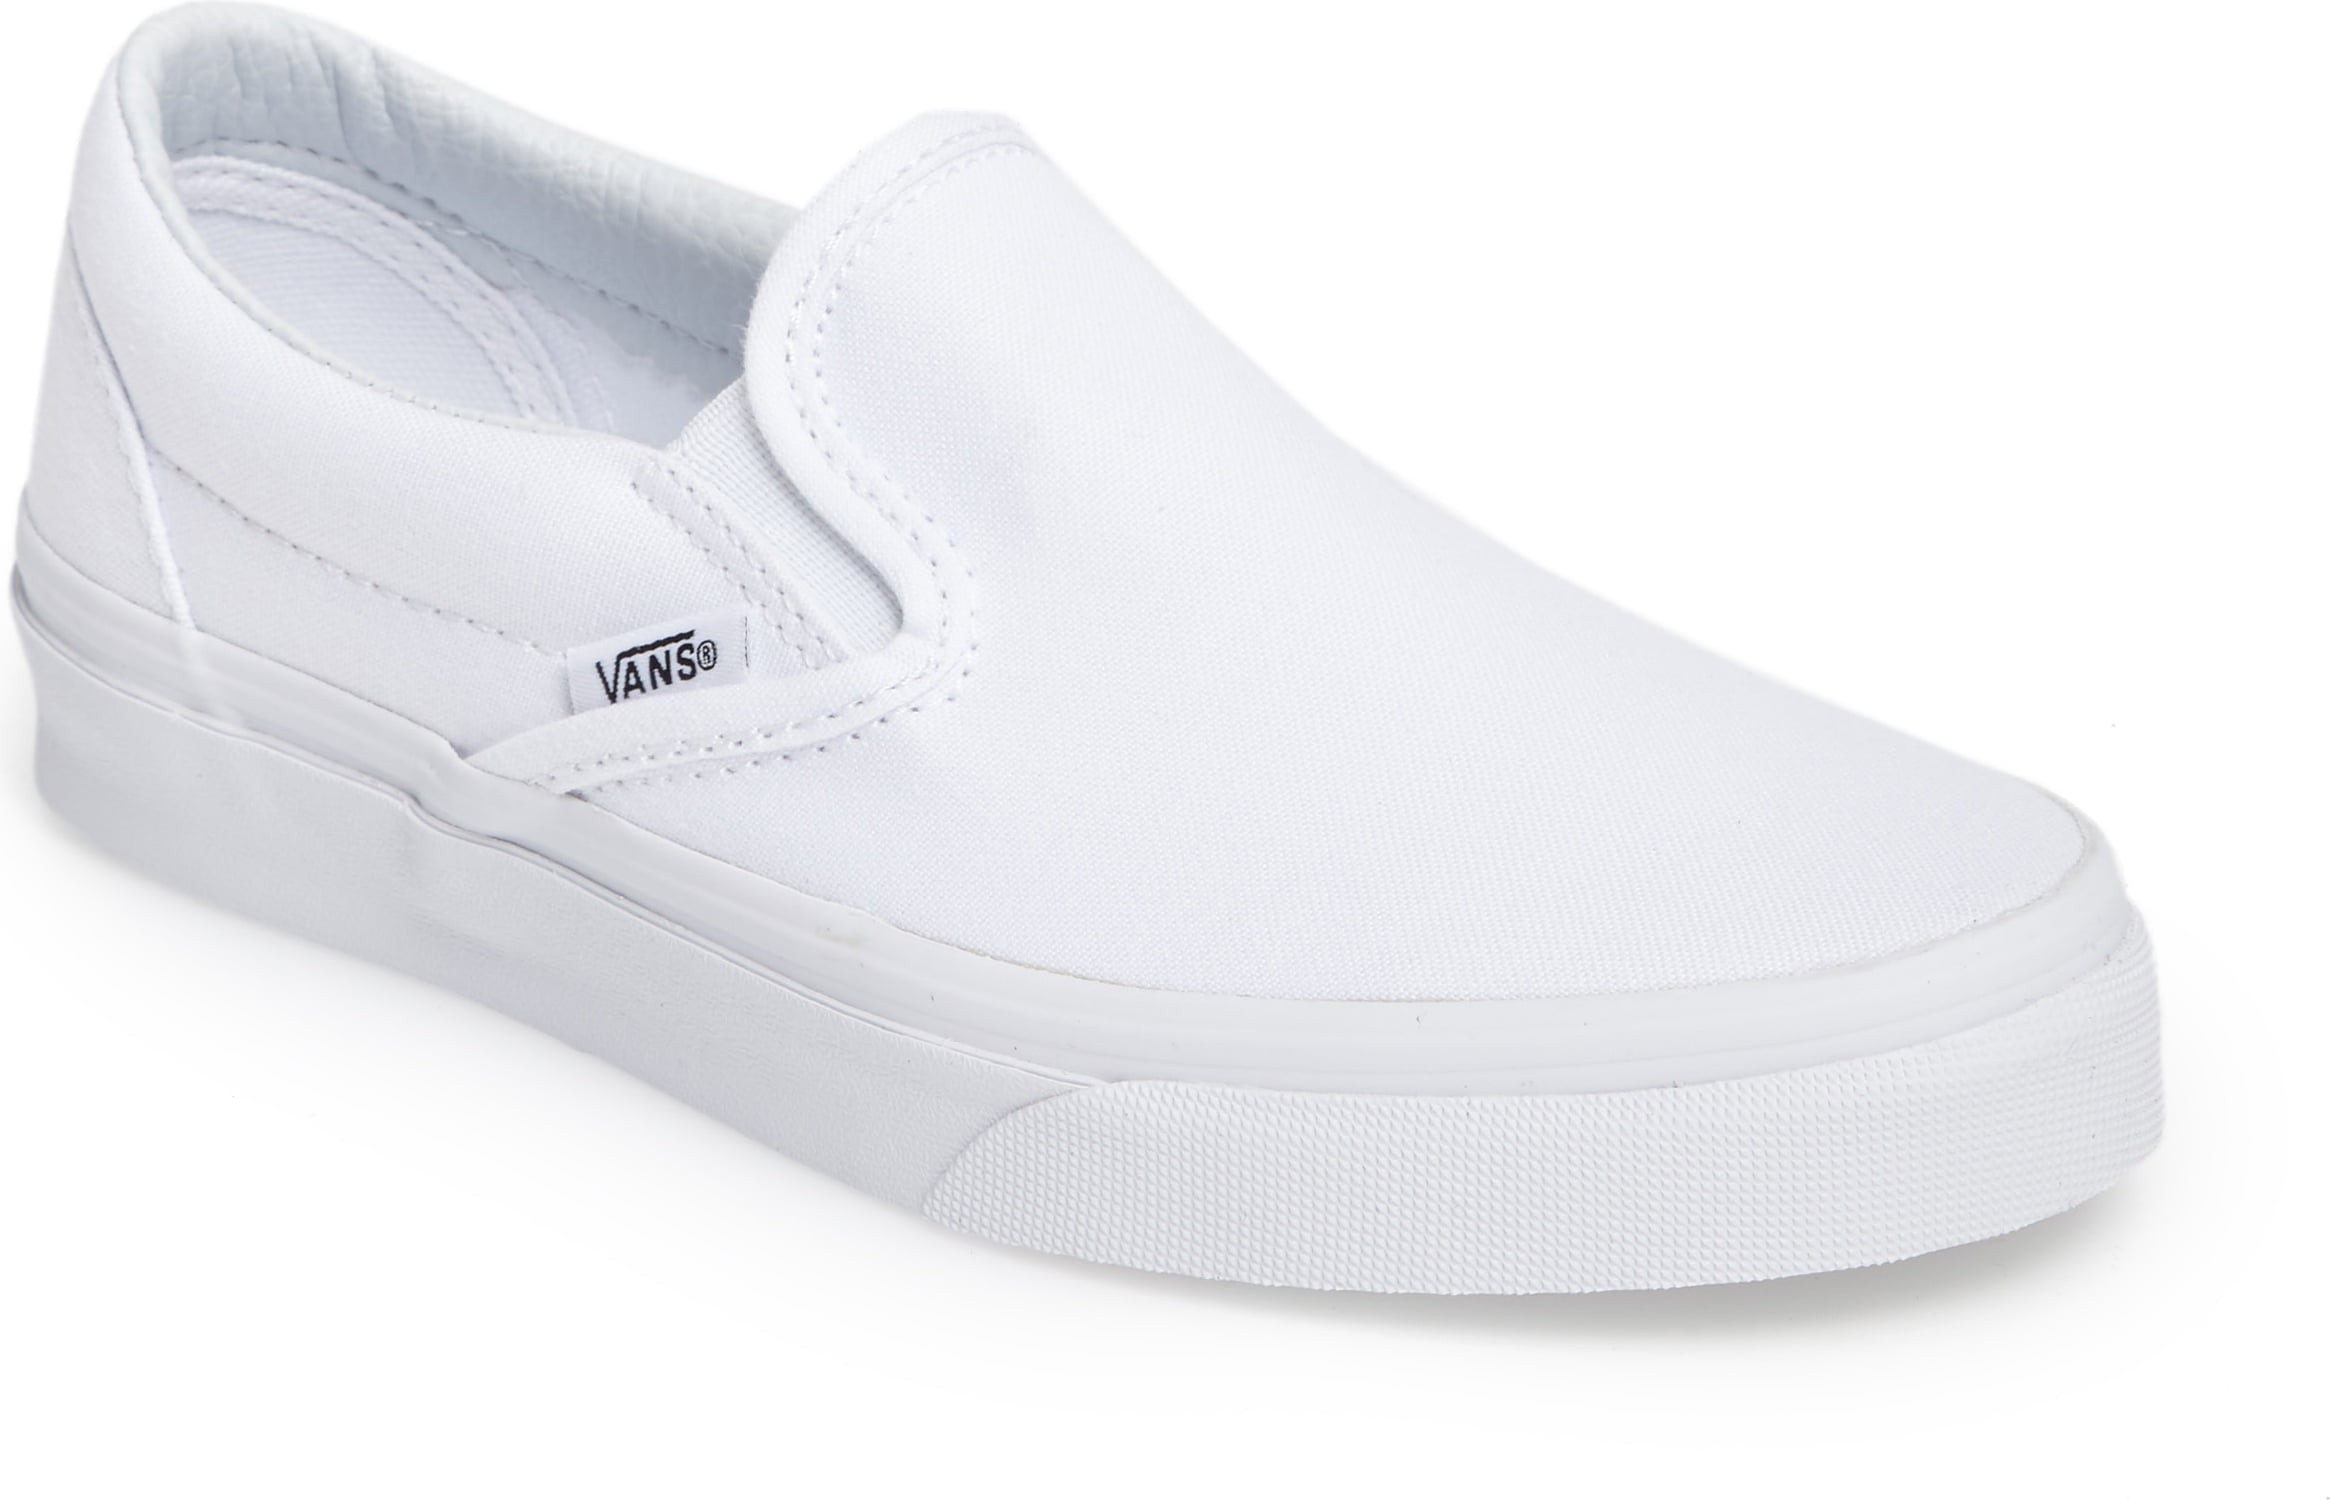 nice white sneakers